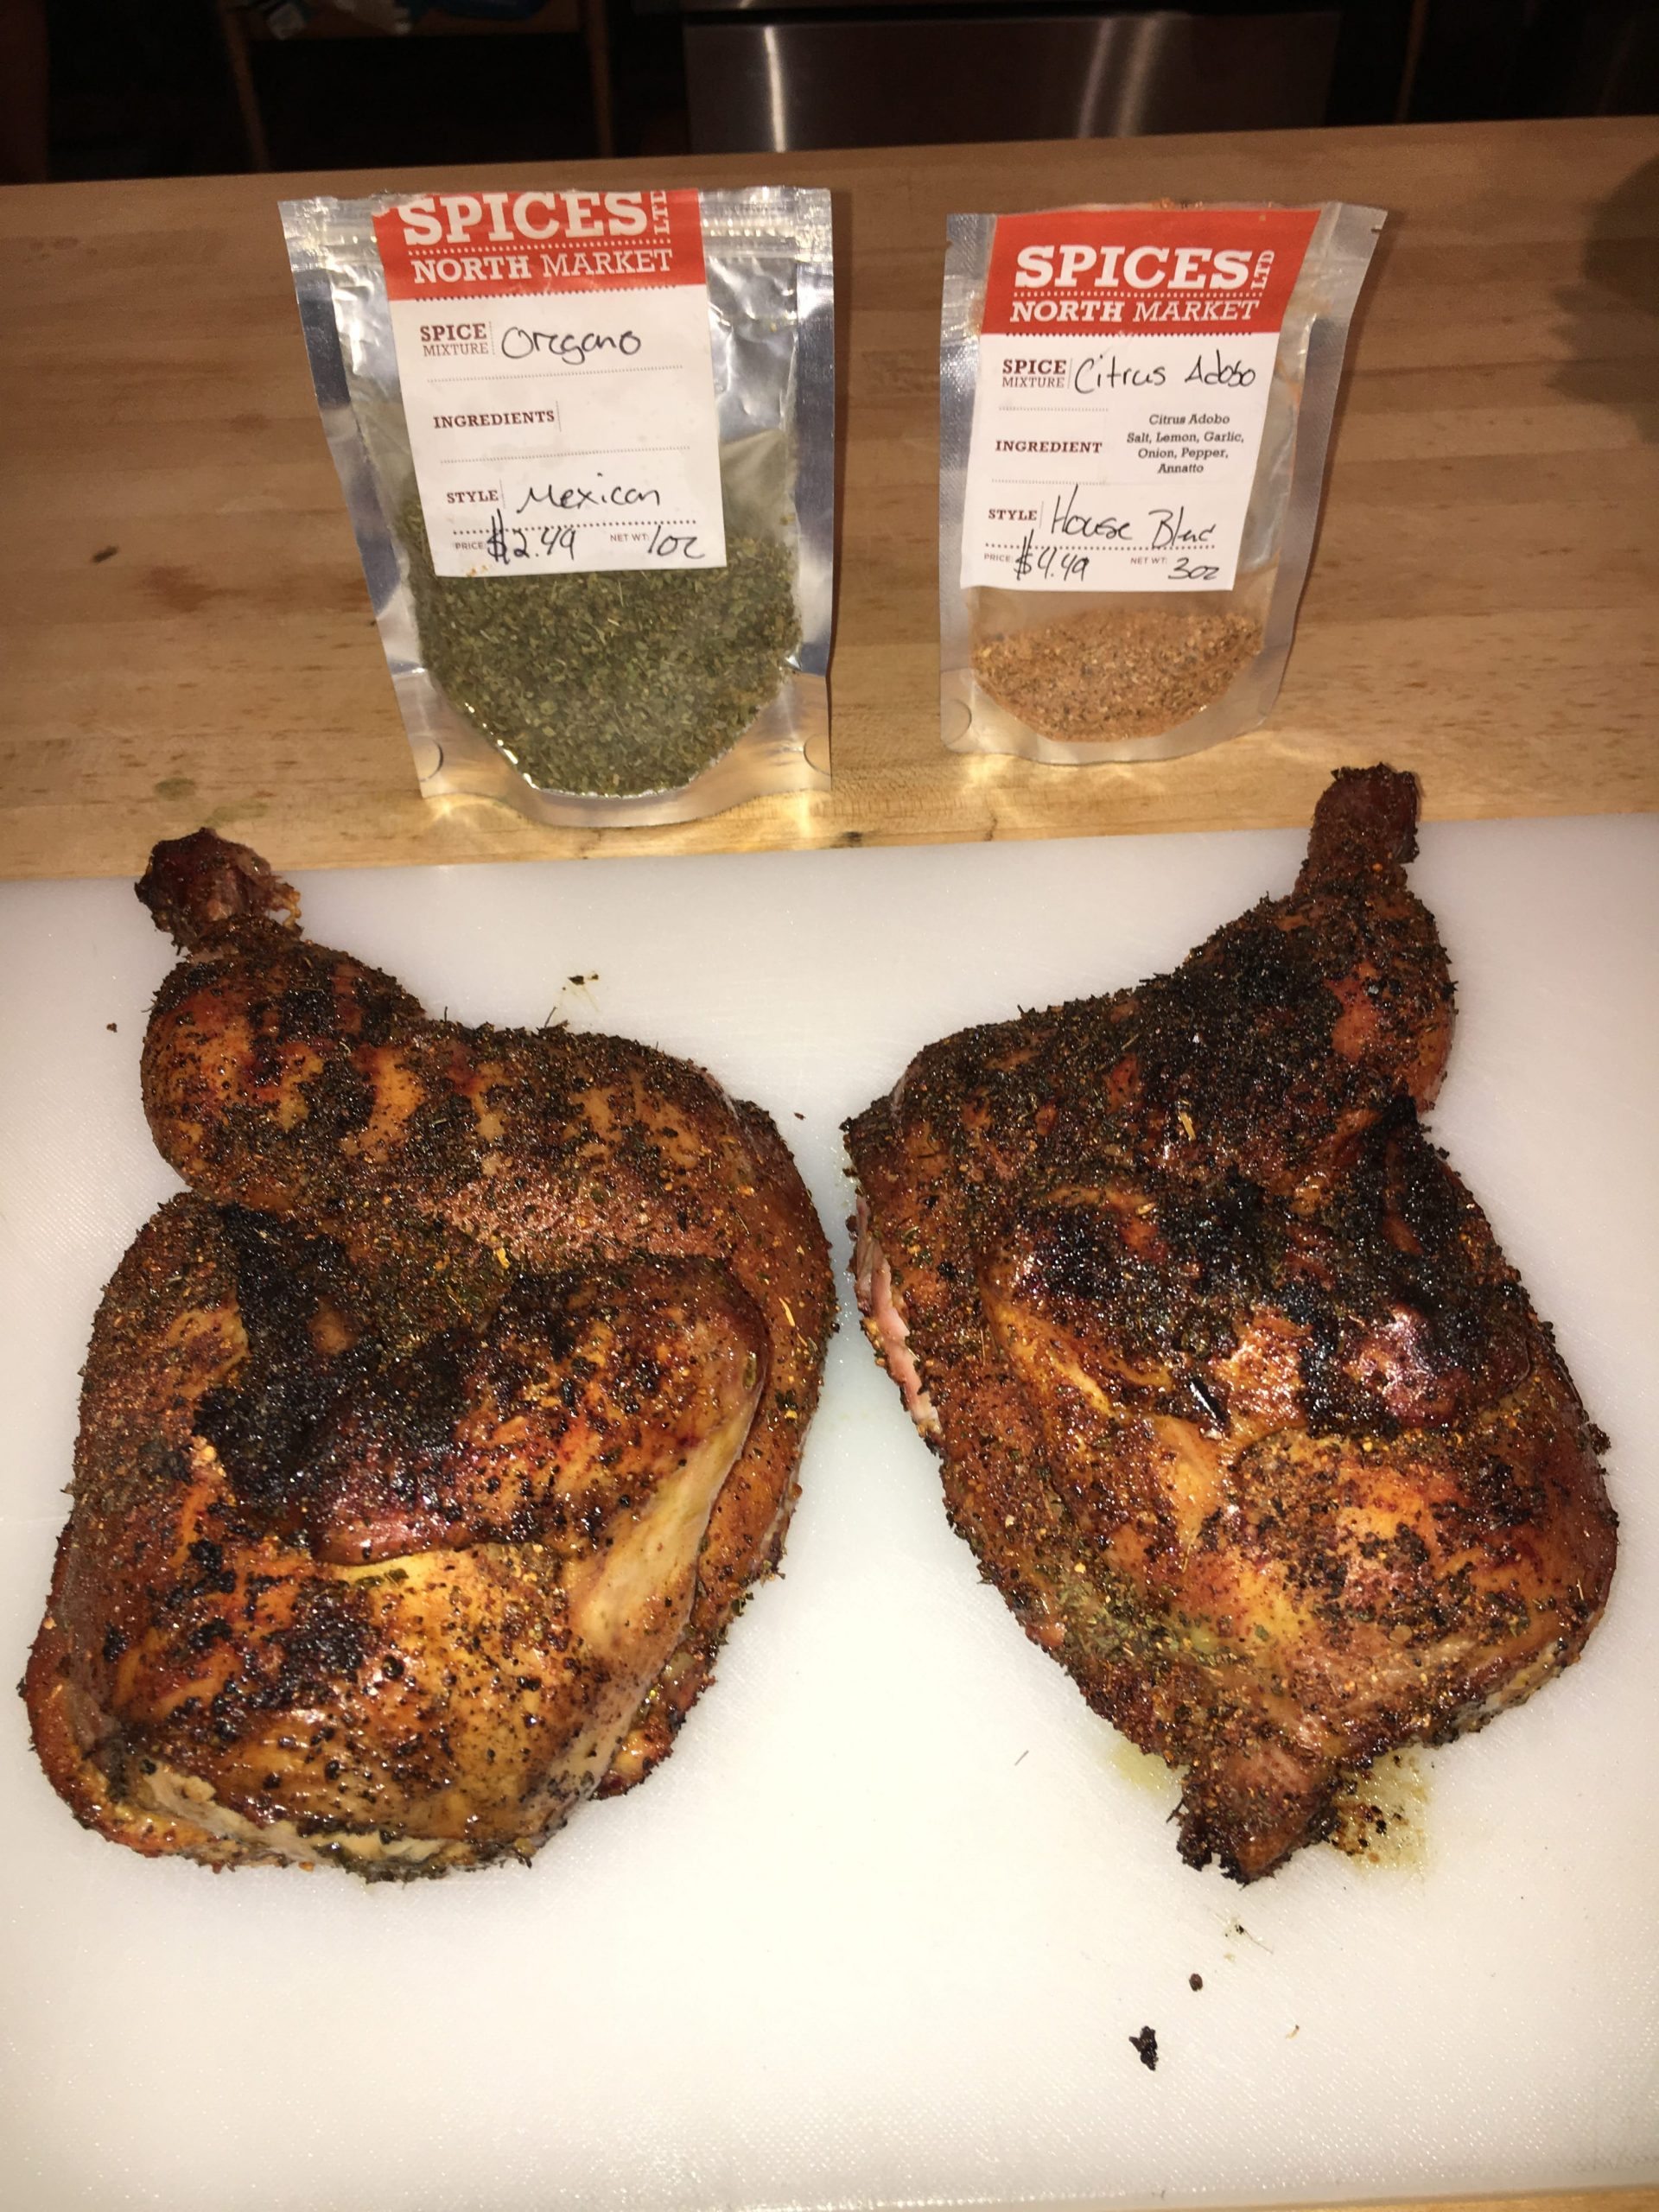 https://northmarket.org/wp-content/uploads/4-20-17-Grilled-Chicken-min-scaled-1.jpg